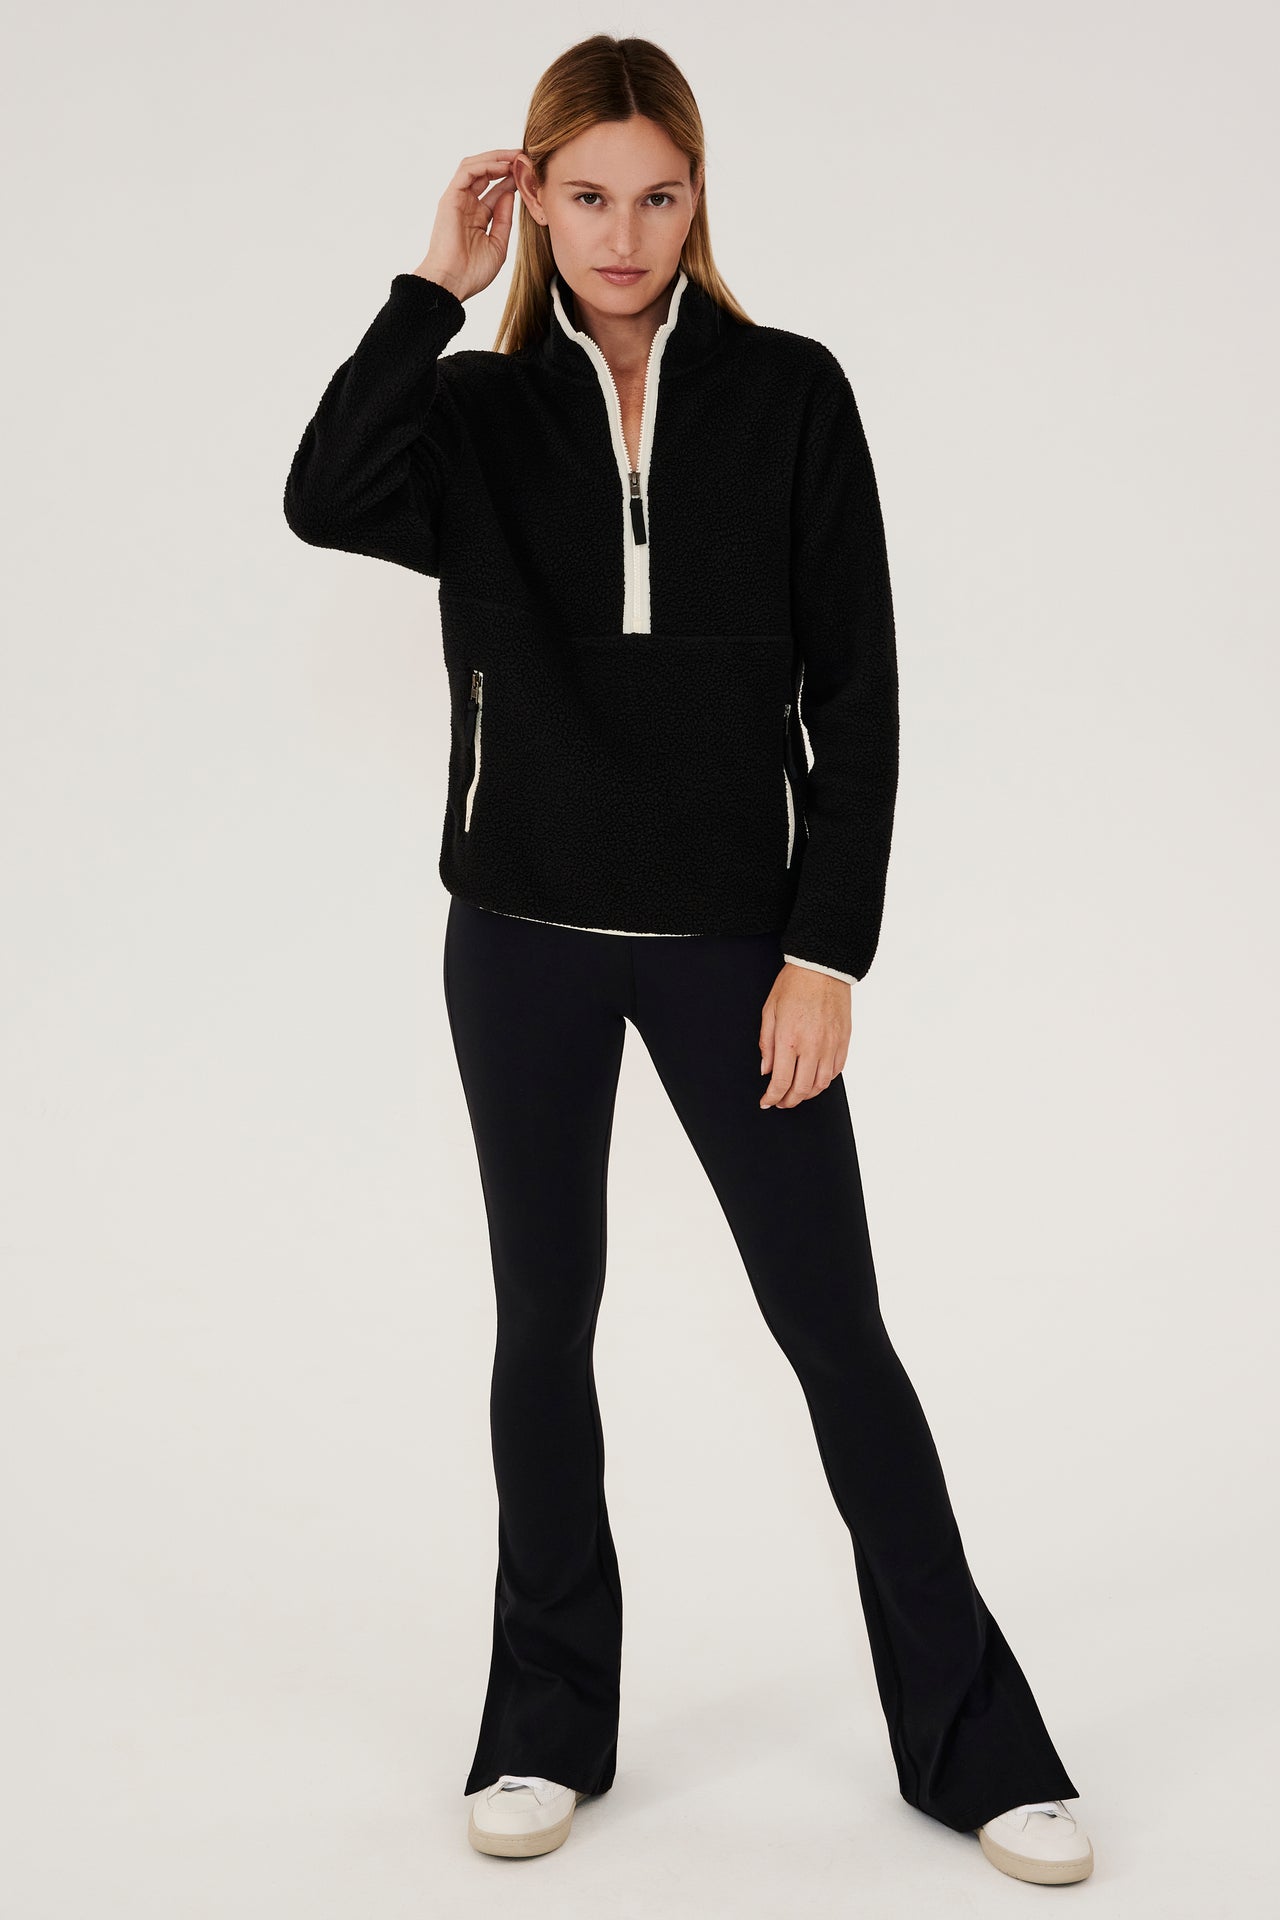 A woman wearing a black SPLITS59 Libby Sherpa Half Zip sweater and leggings.